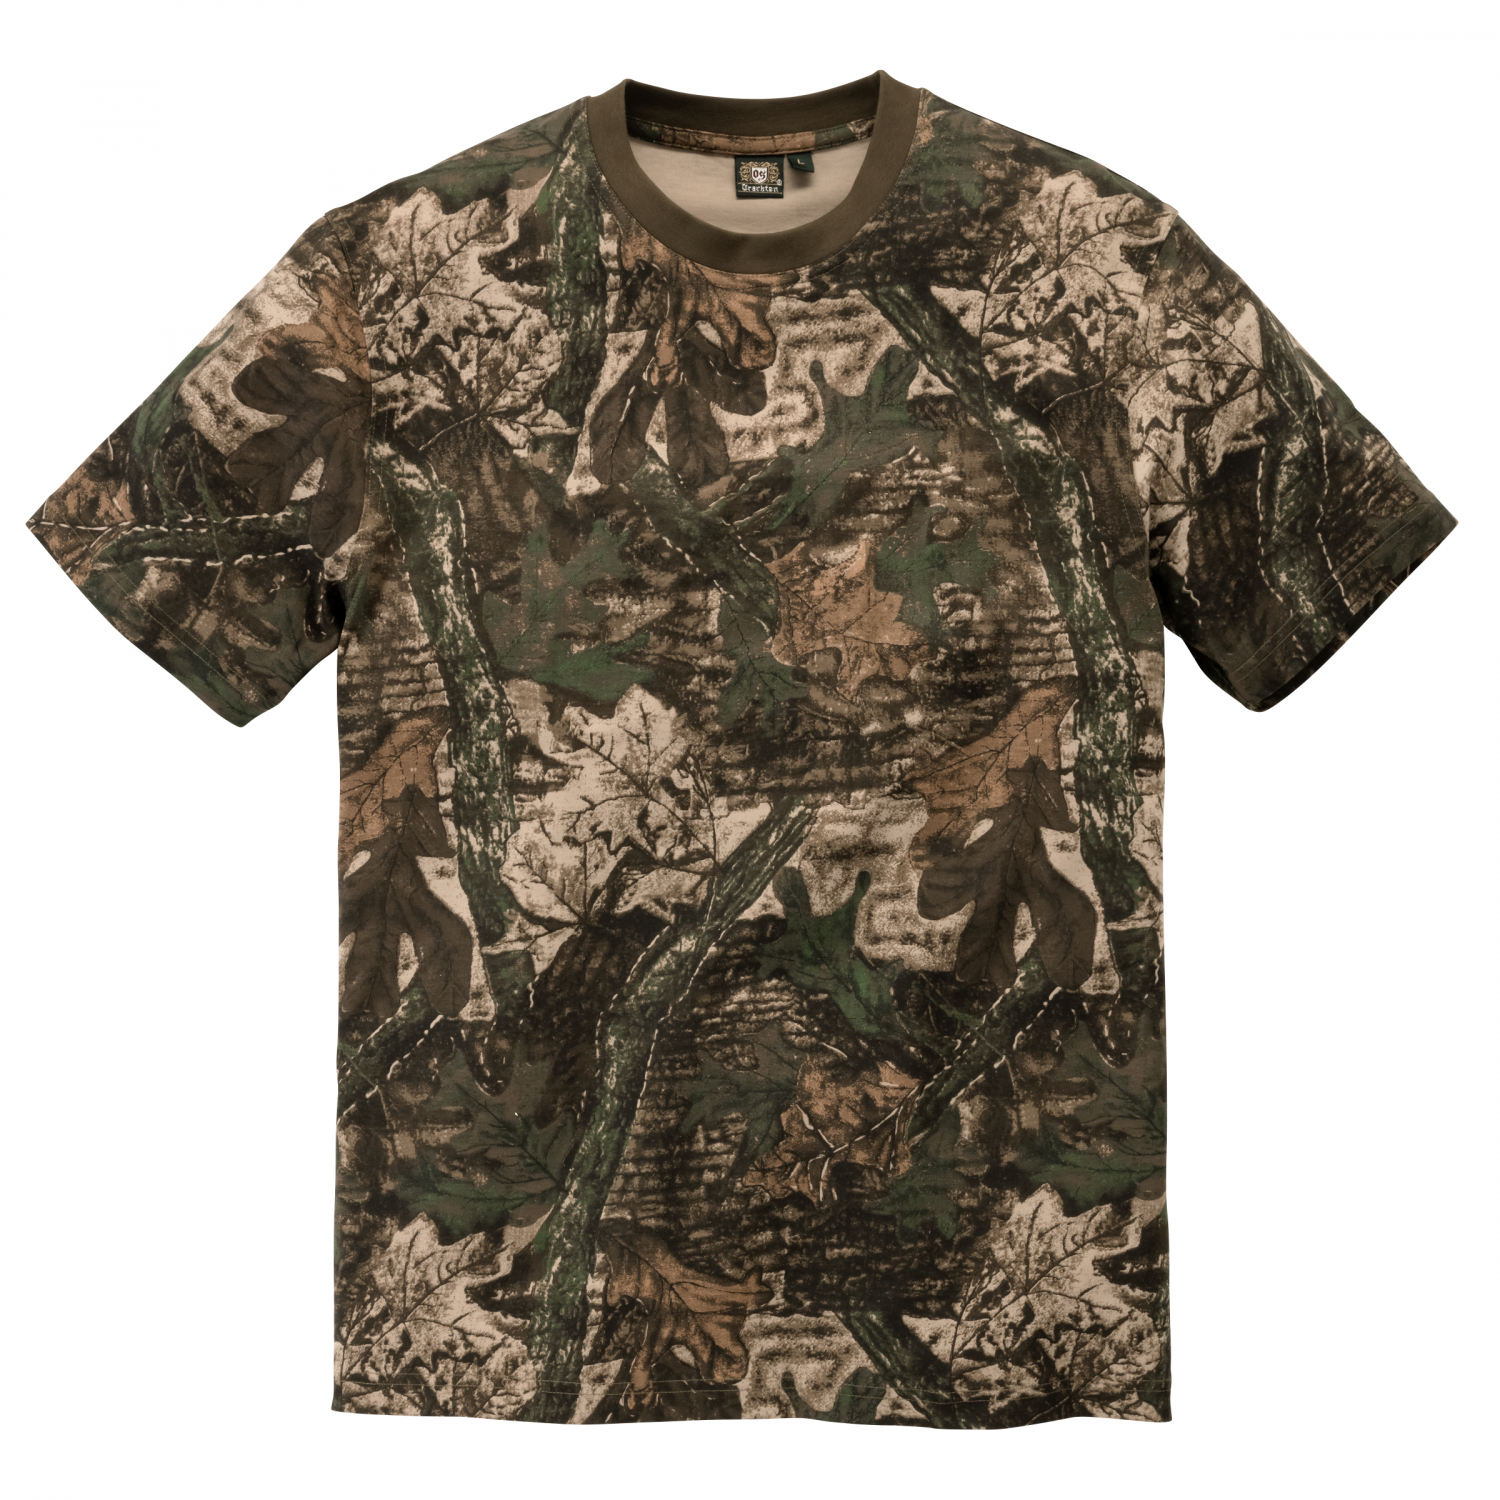 OS Trachten Herren OS Trachten Herren T-Shirt Doppelpack Camouflage 